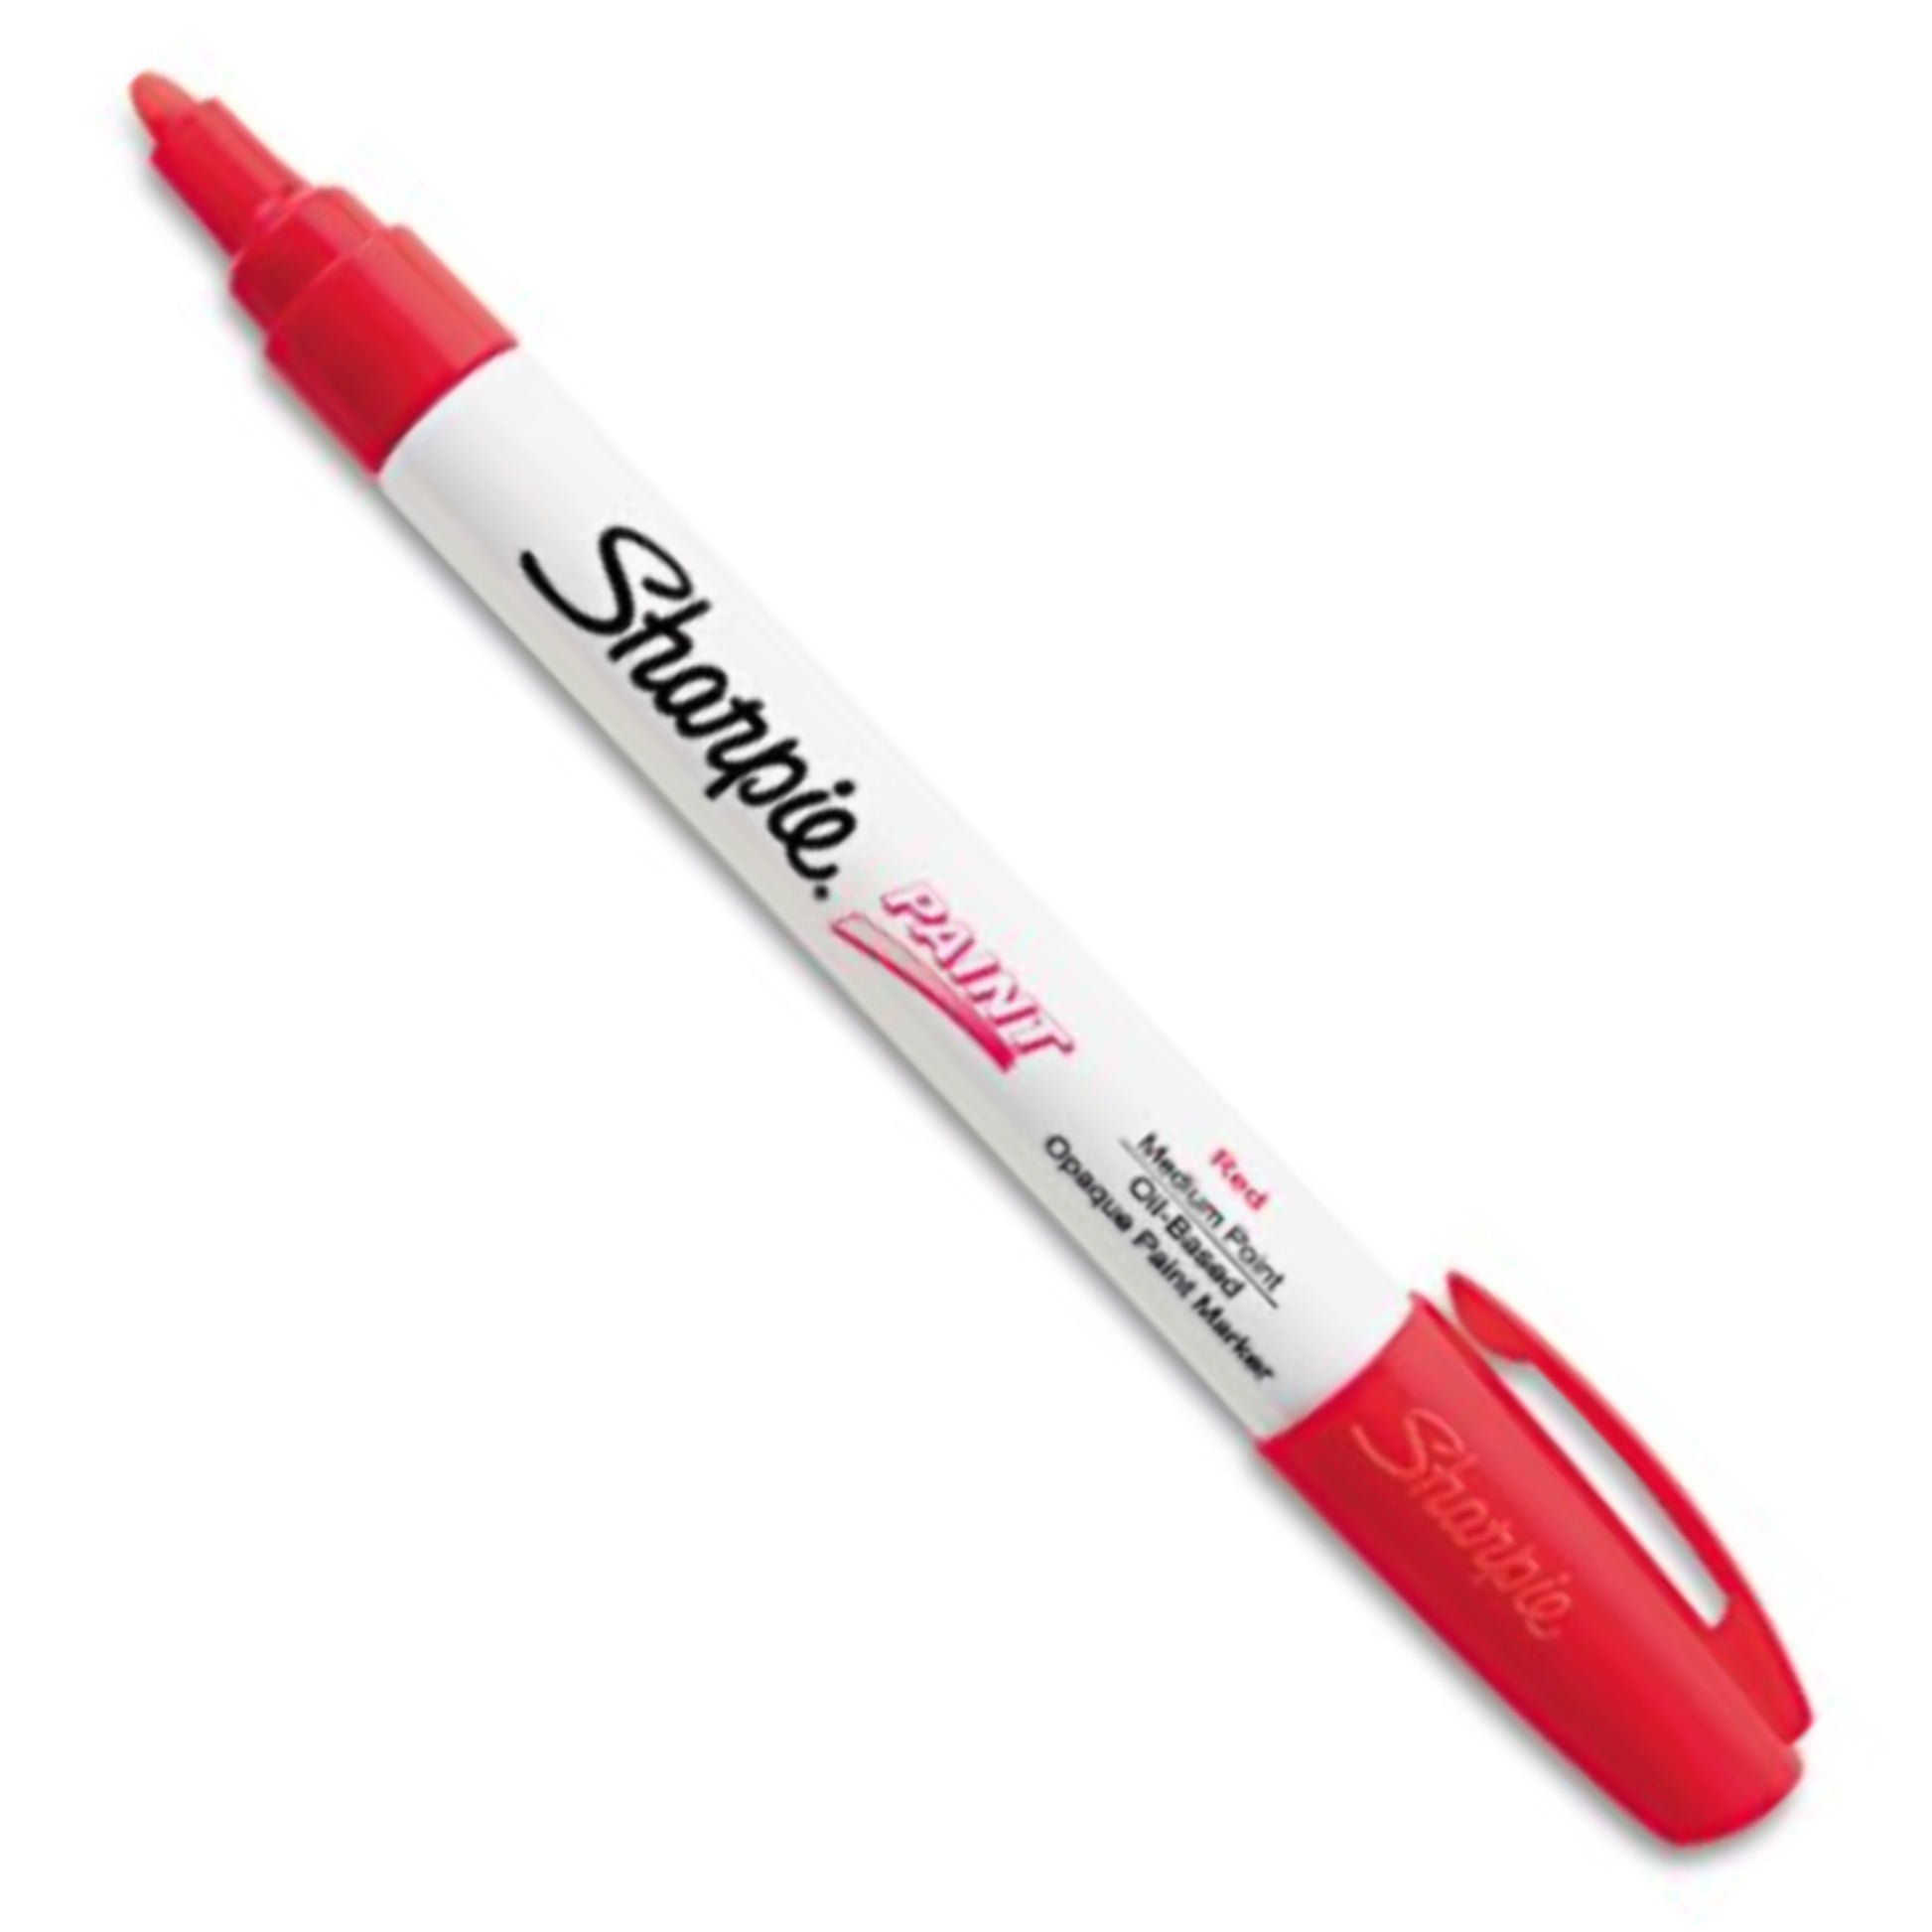 Sharpie Oil-Based Paint Markers, 4 Tip Size Kit (Extra Fine, Fine, Medium,  Bold)